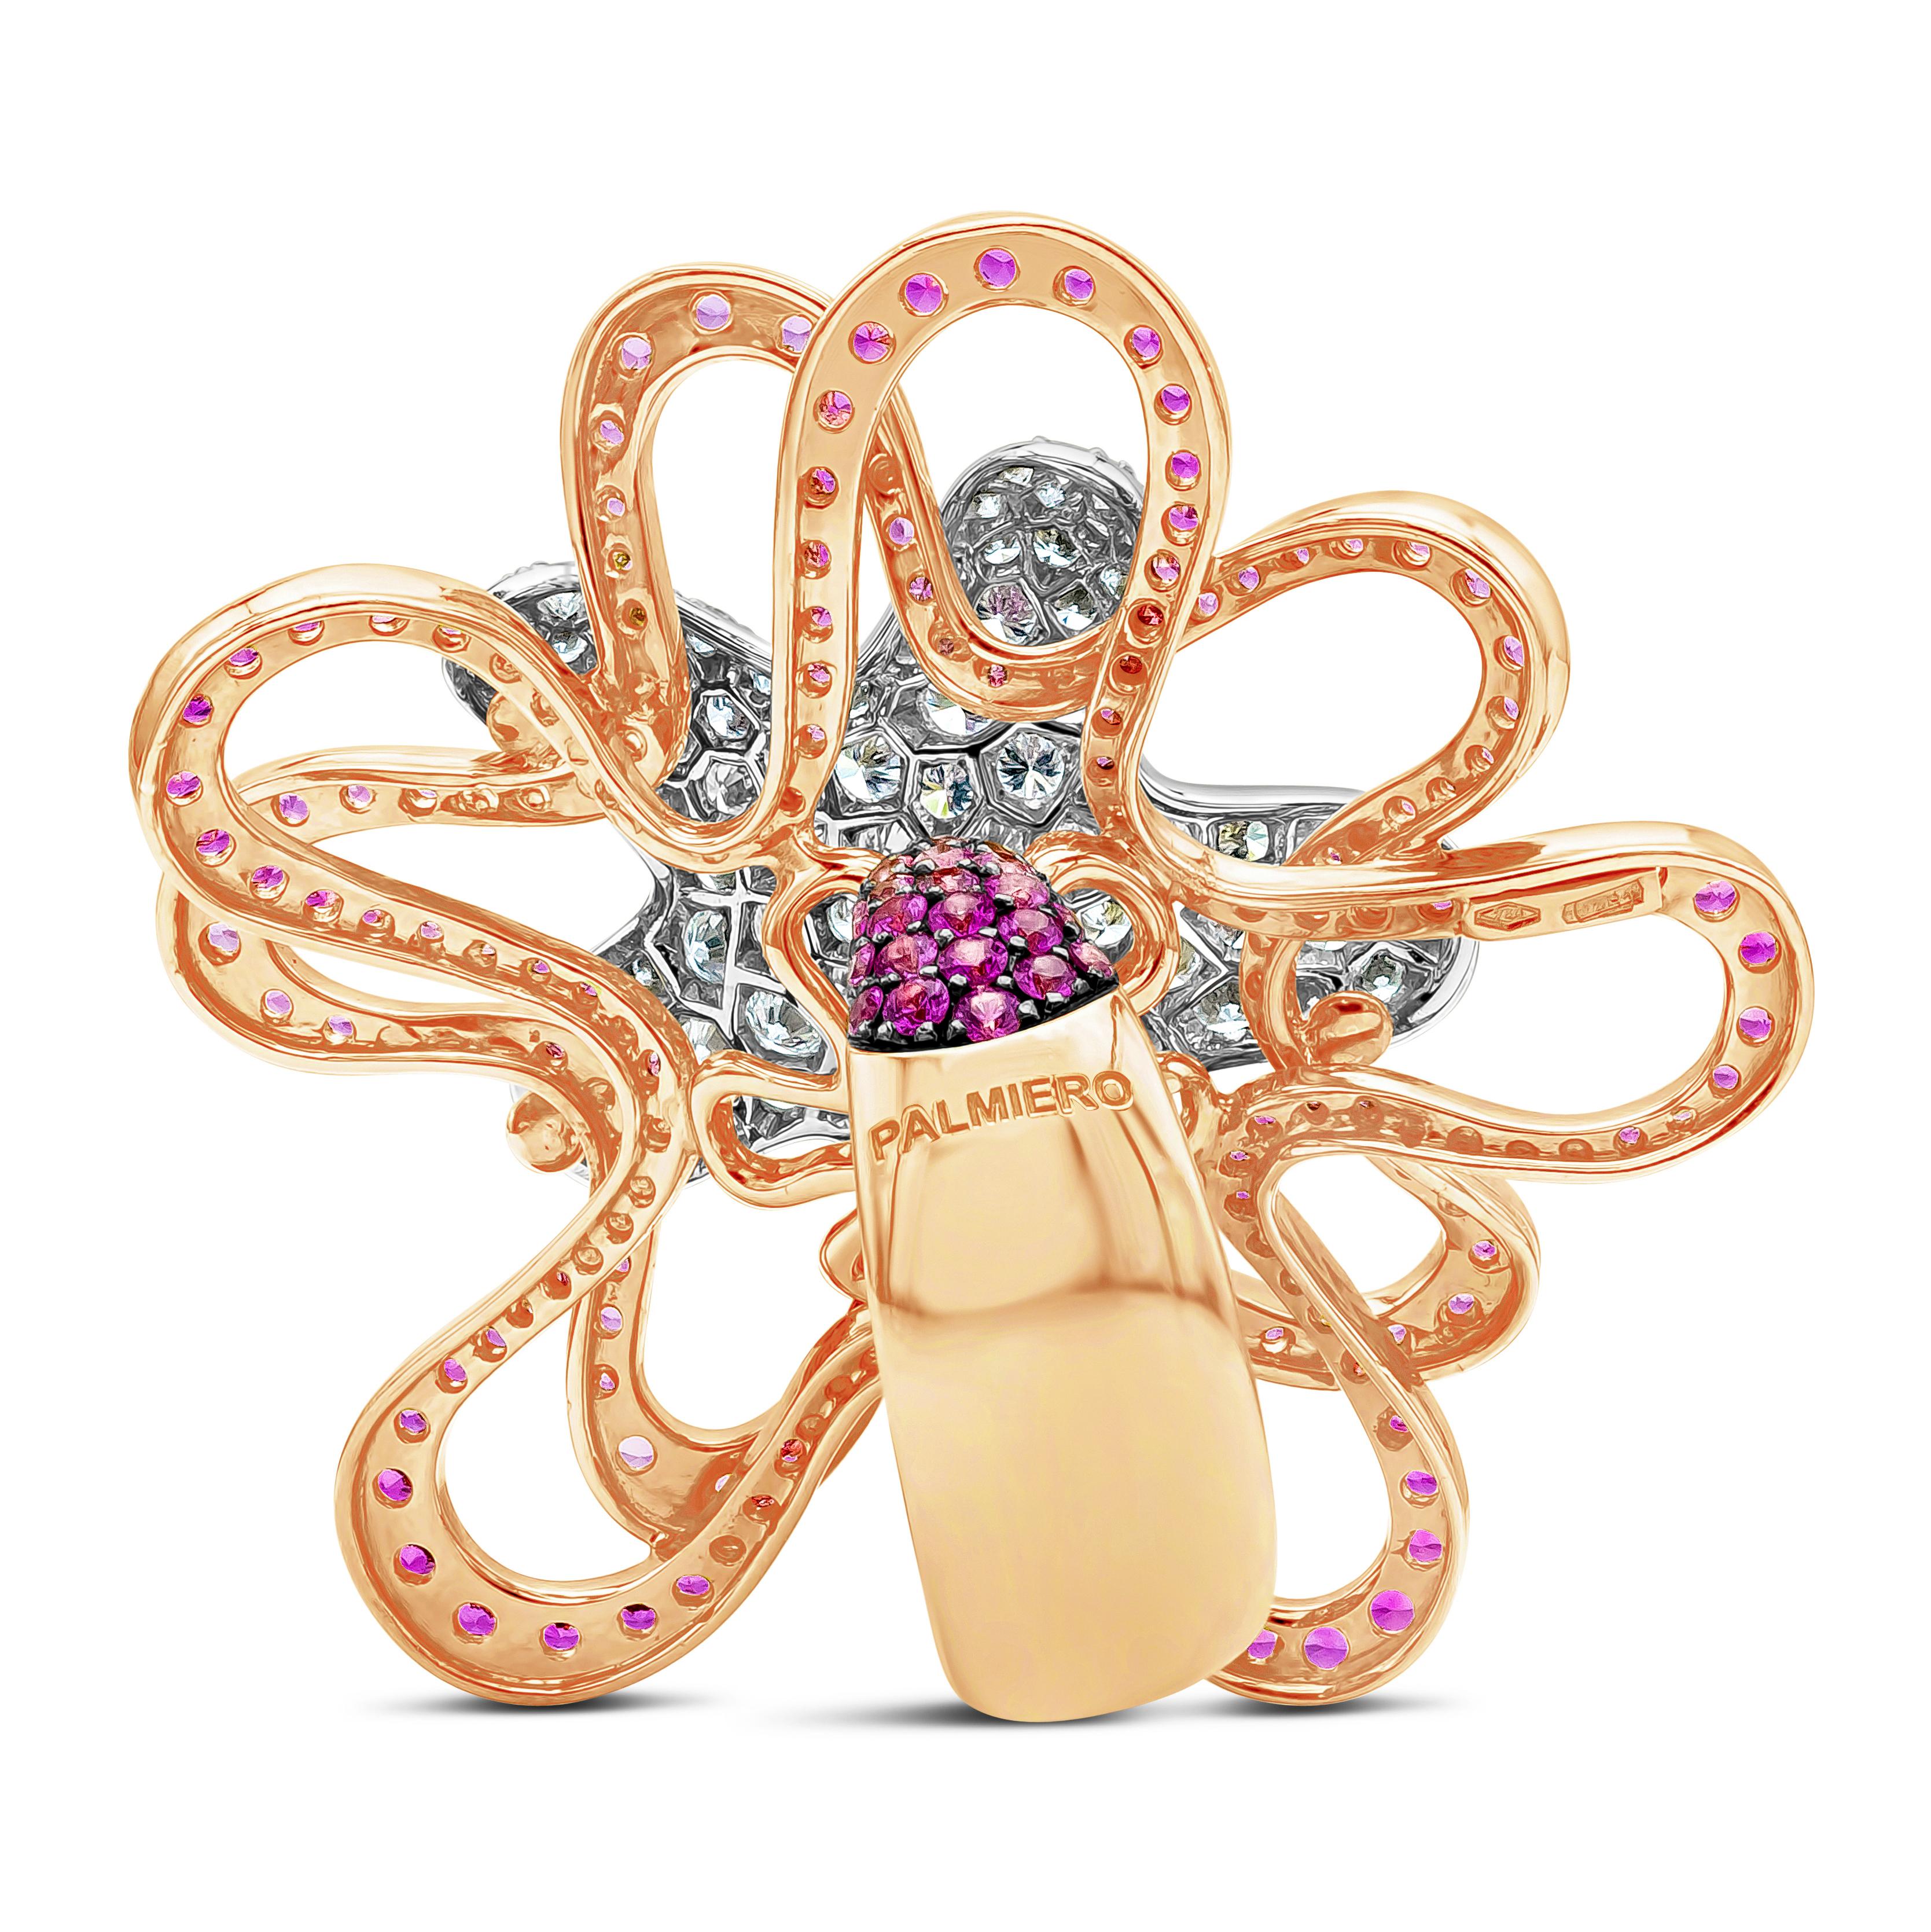 Women's Palmiero Jewellery Design 8.17 Carat Total Pink Sapphire & Diamond Fashion Ring For Sale